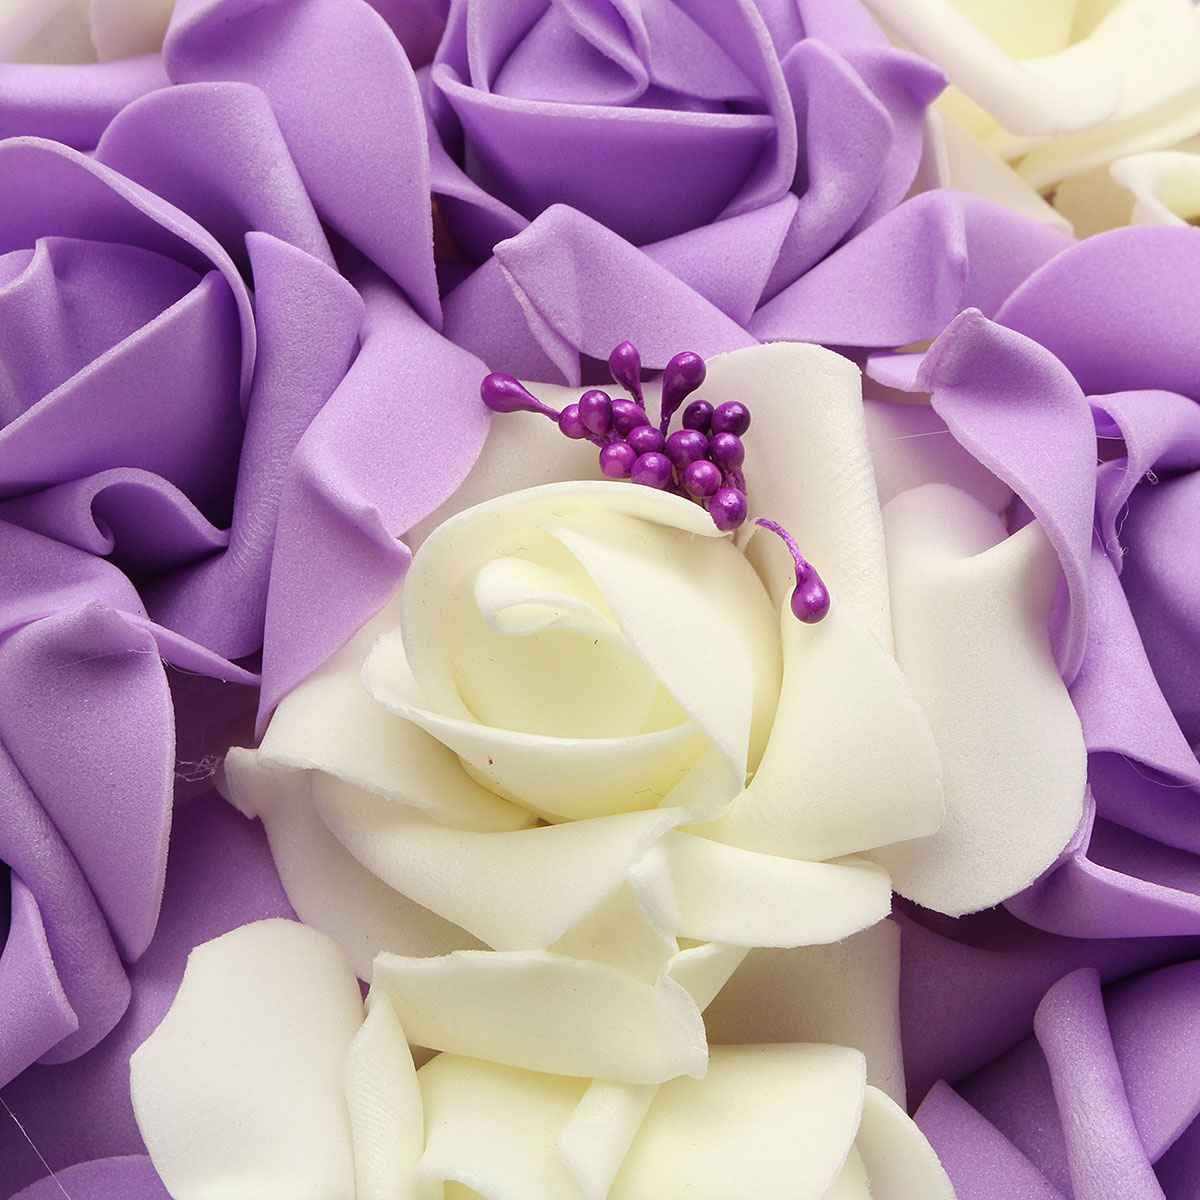 Bride-Artificial-Foam-Roses-Bouquet-Pink-Purple-Silk-Ribbon-Wedding-Bridesmaid-Flower-Girls-1065993